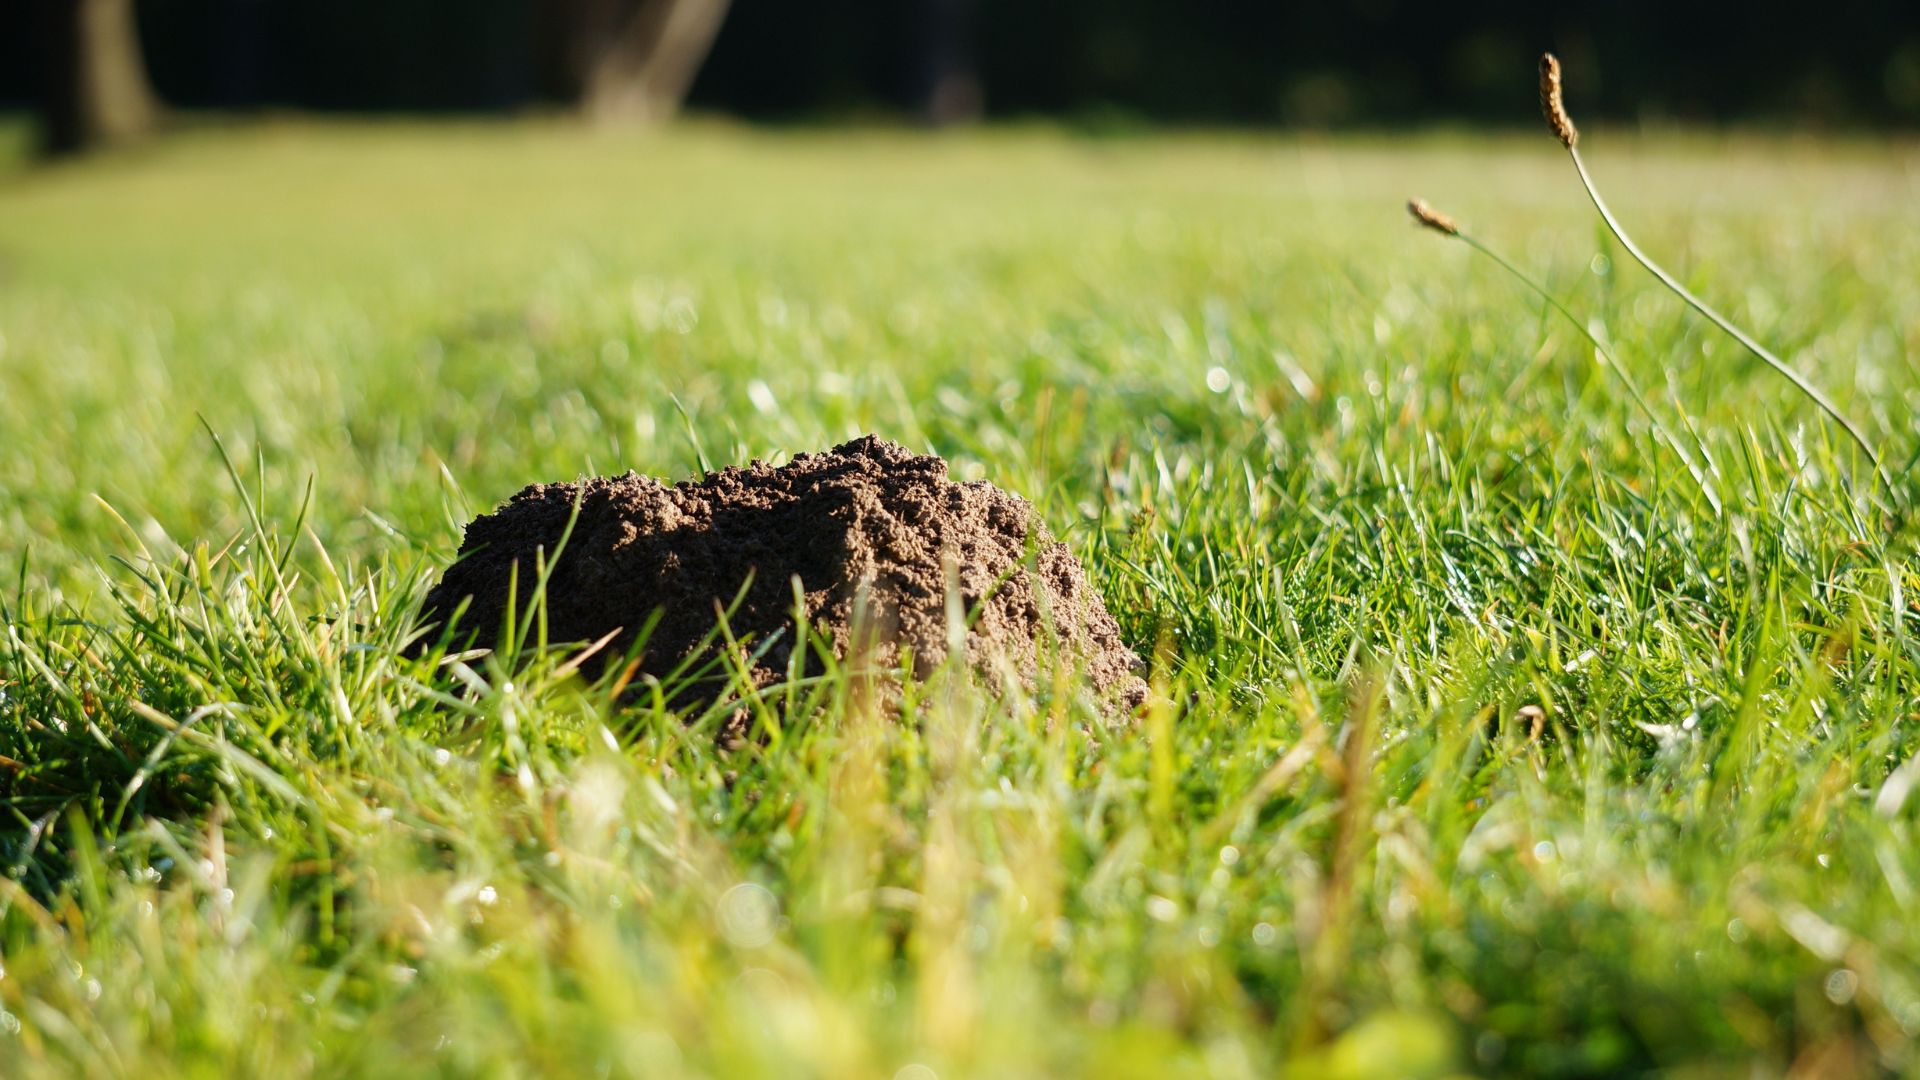 An image of a single molehill in a grassy field.